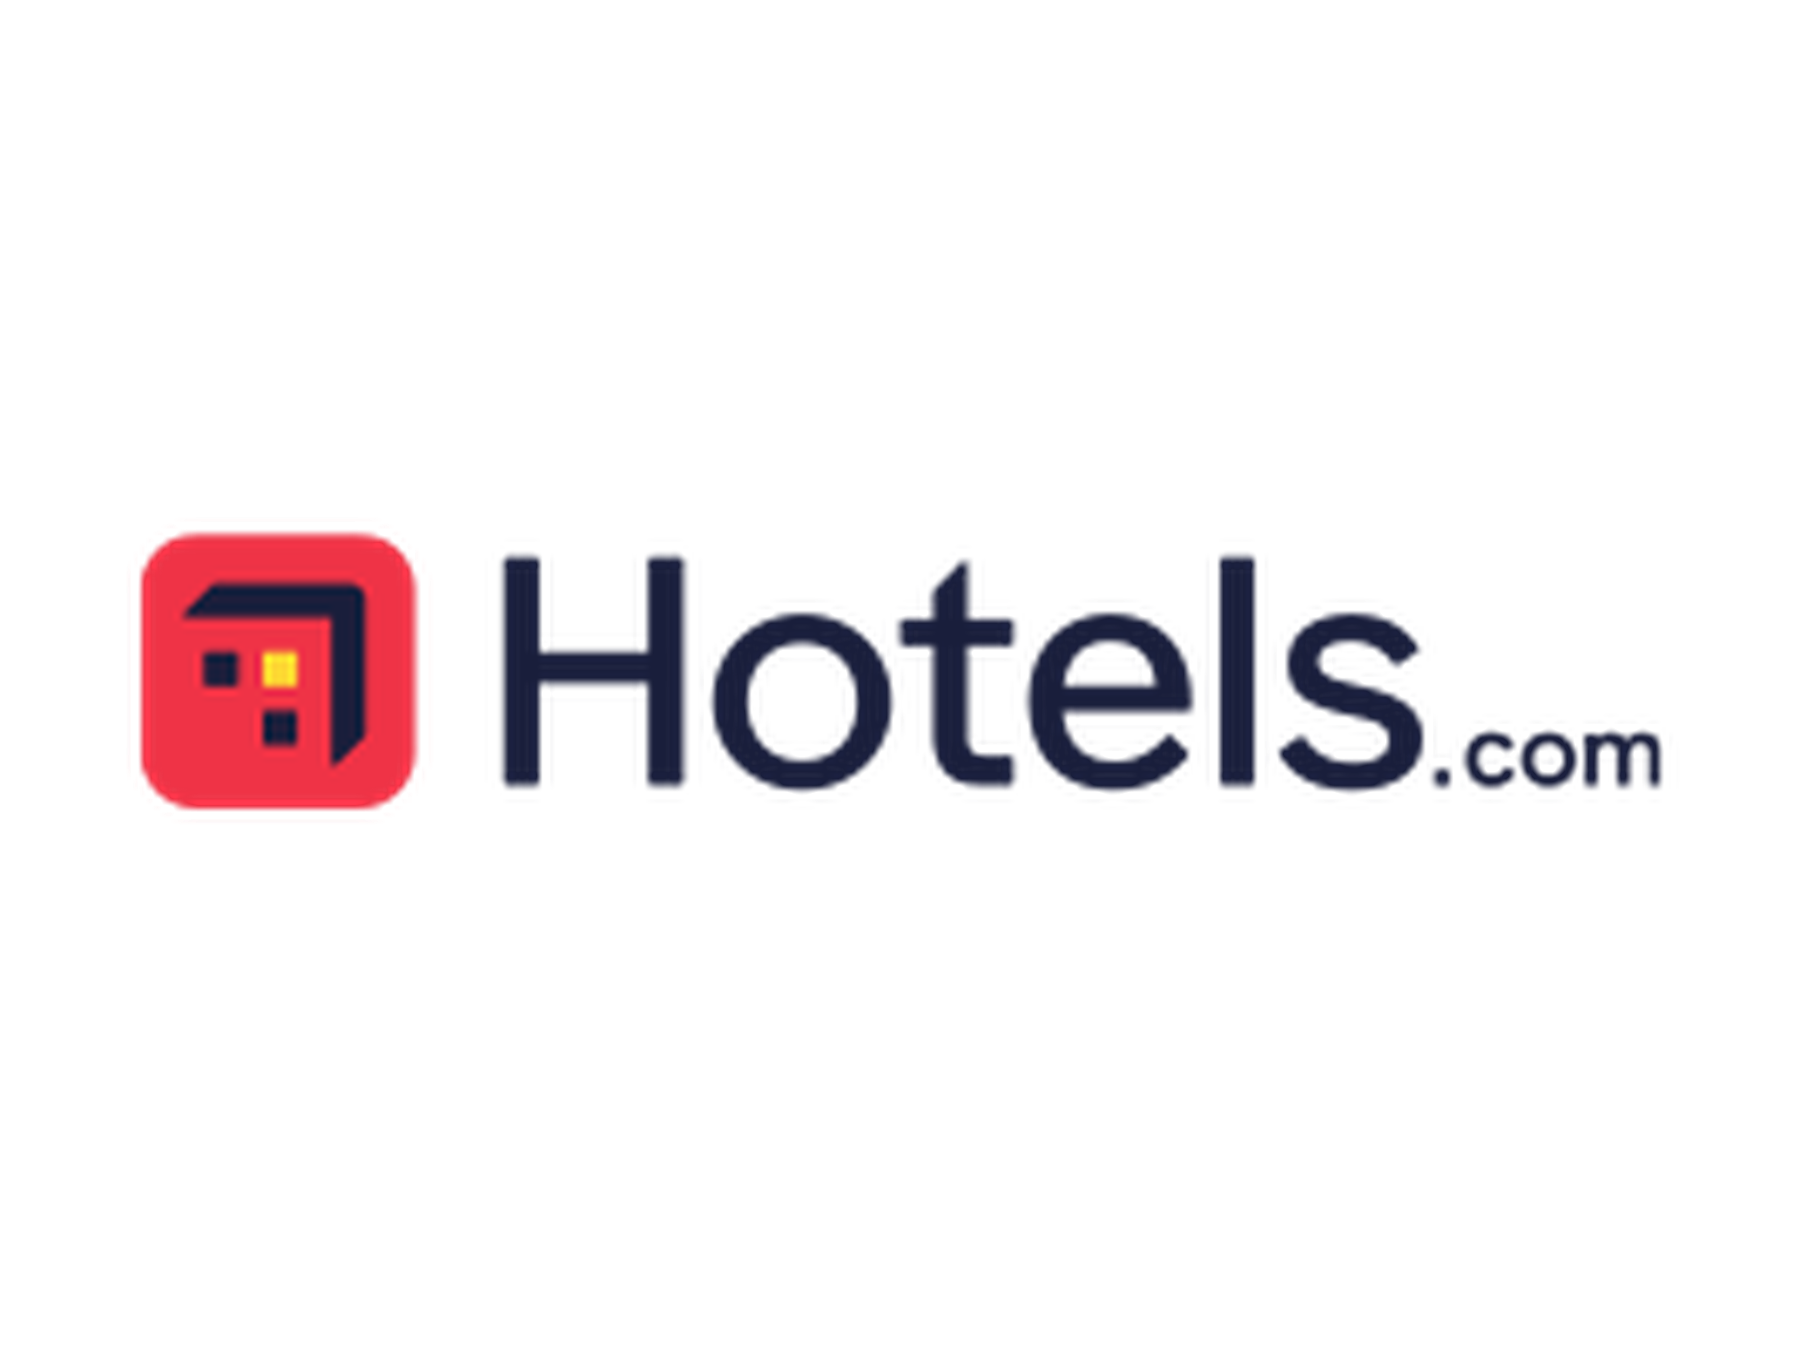 Cupón Hoteles.com